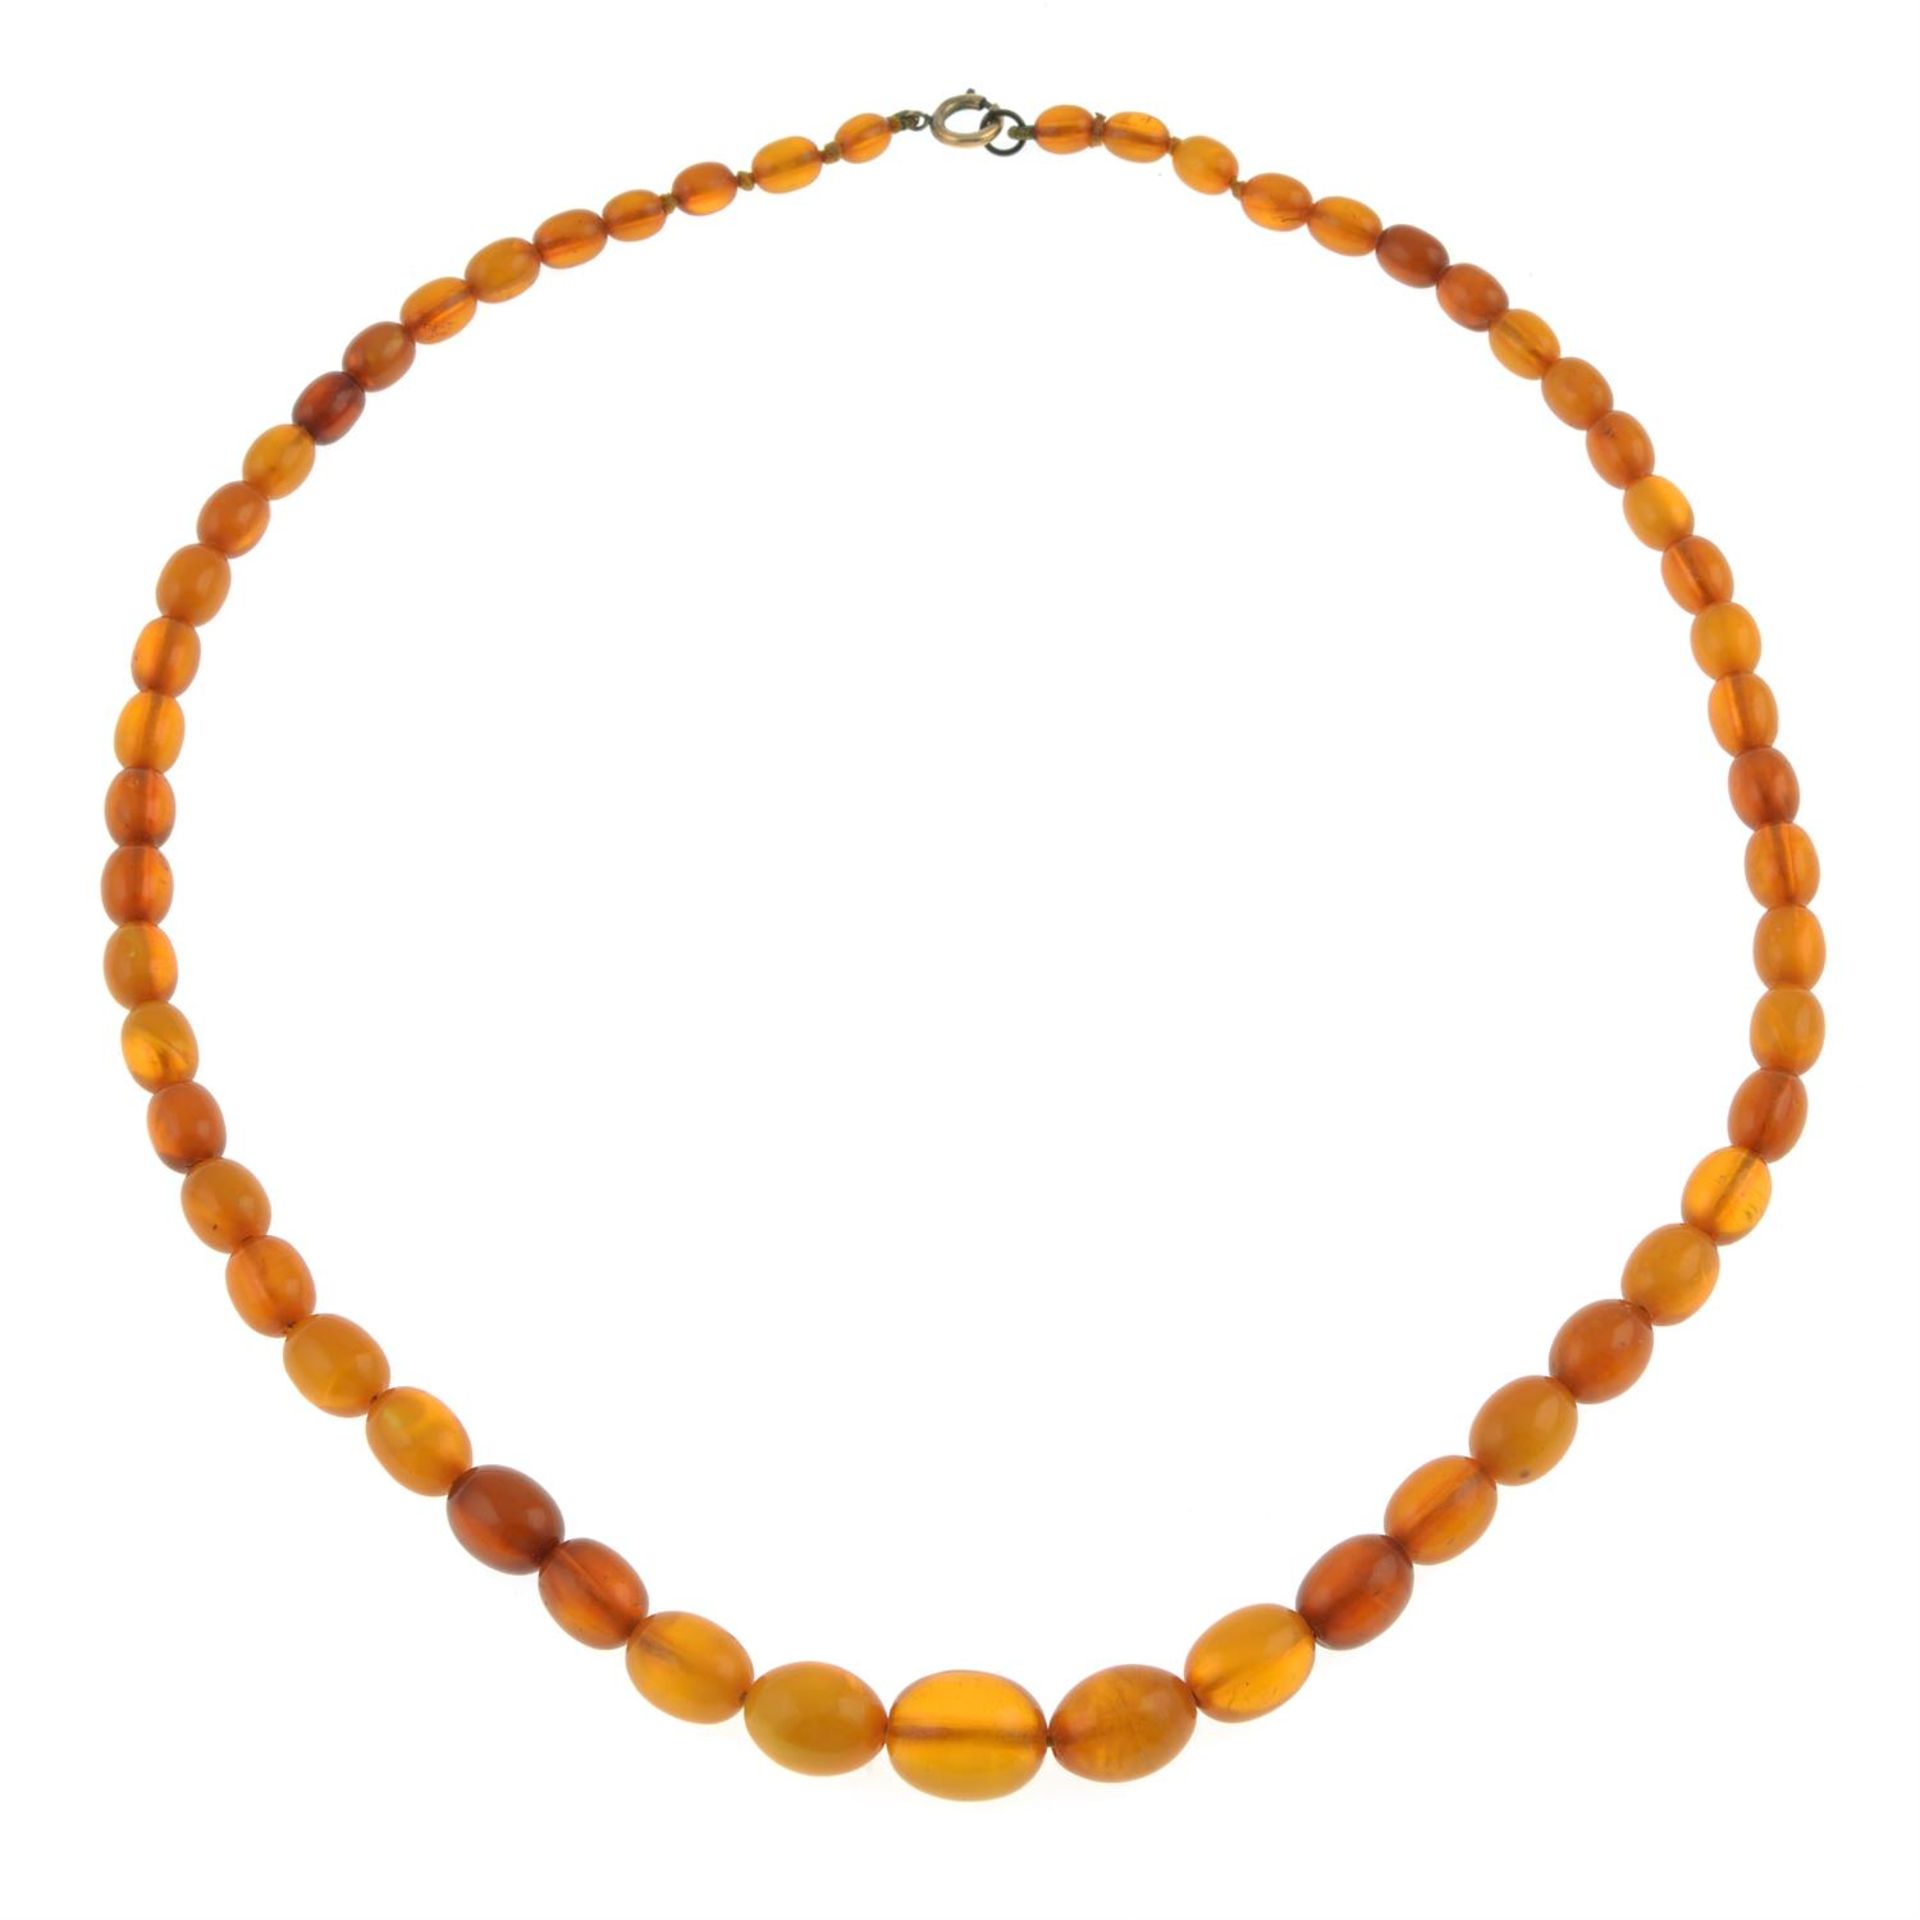 Amber single-strand necklace